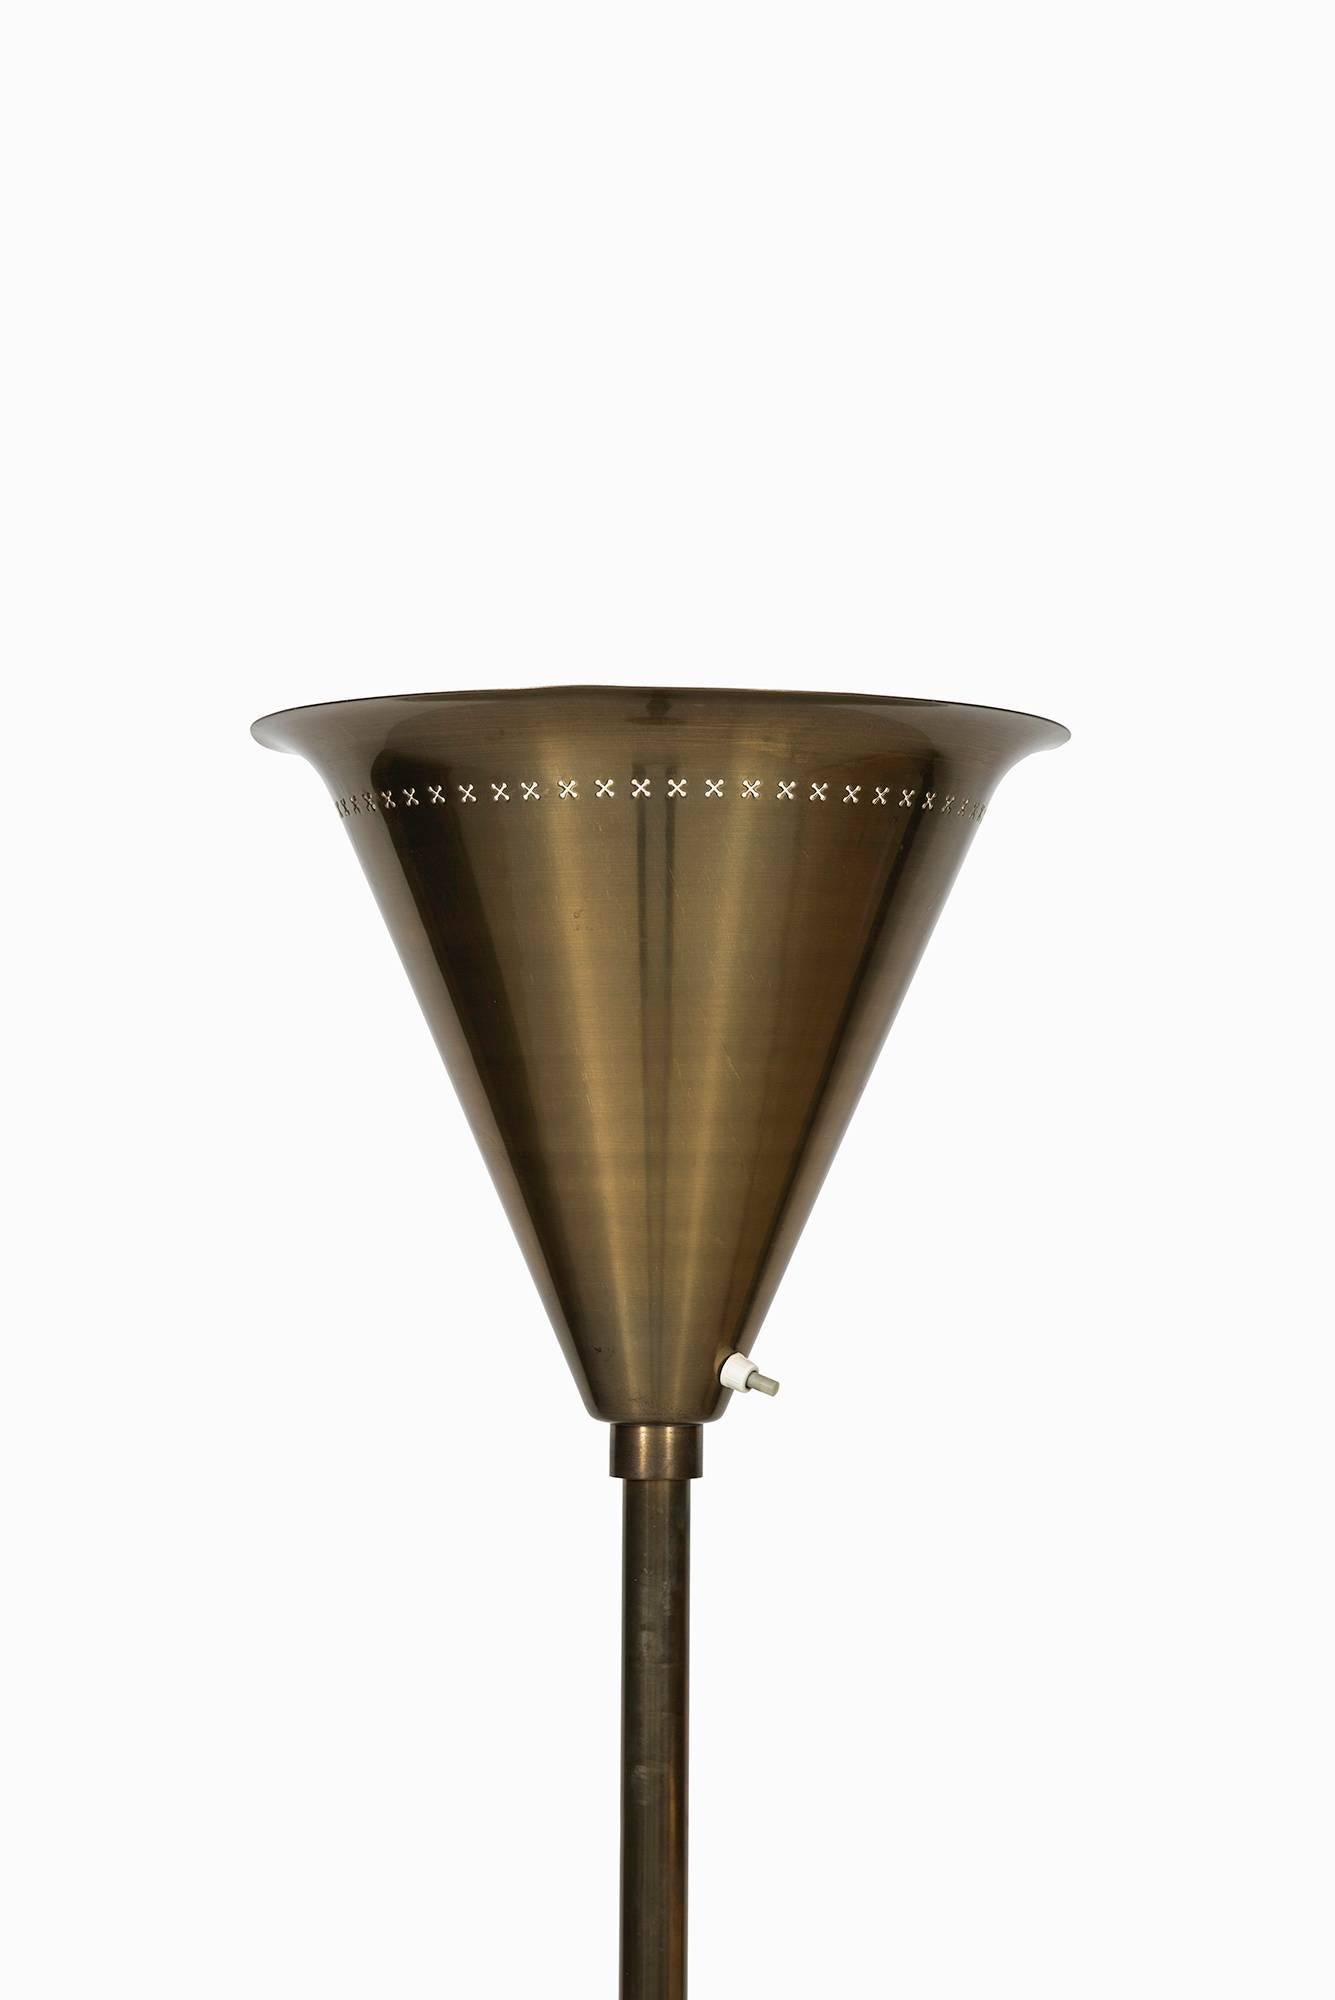 Floor lamp / uplight in brass produced in Denmark.